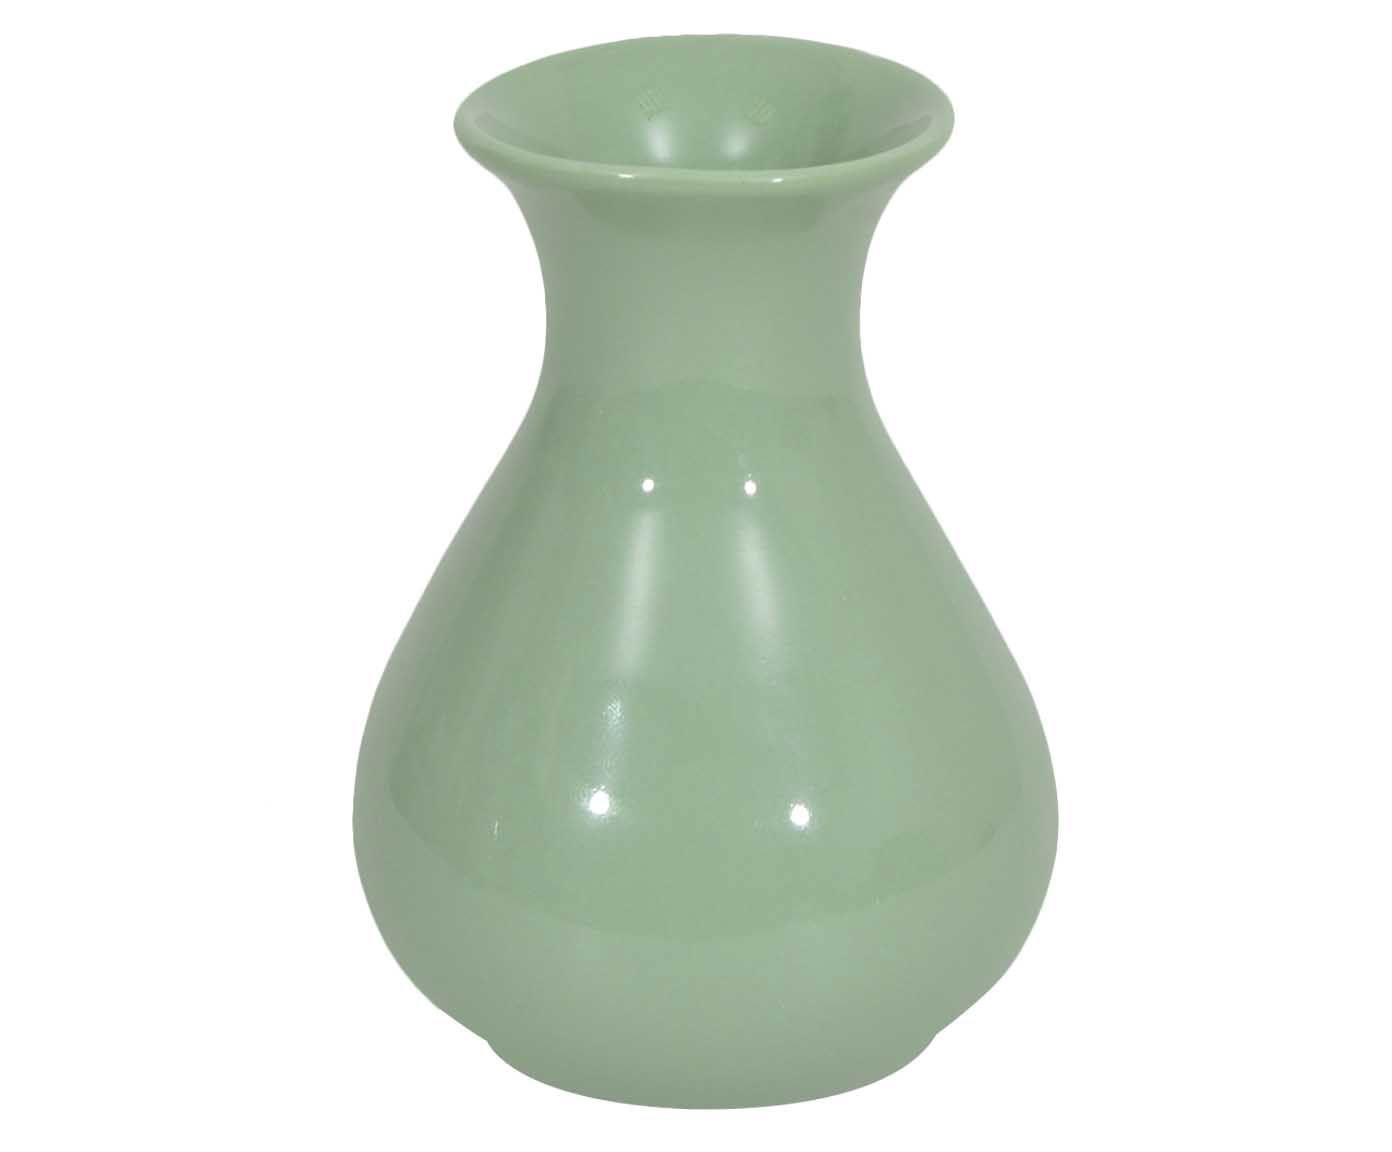 Vaso mini cret | Westwing.com.br